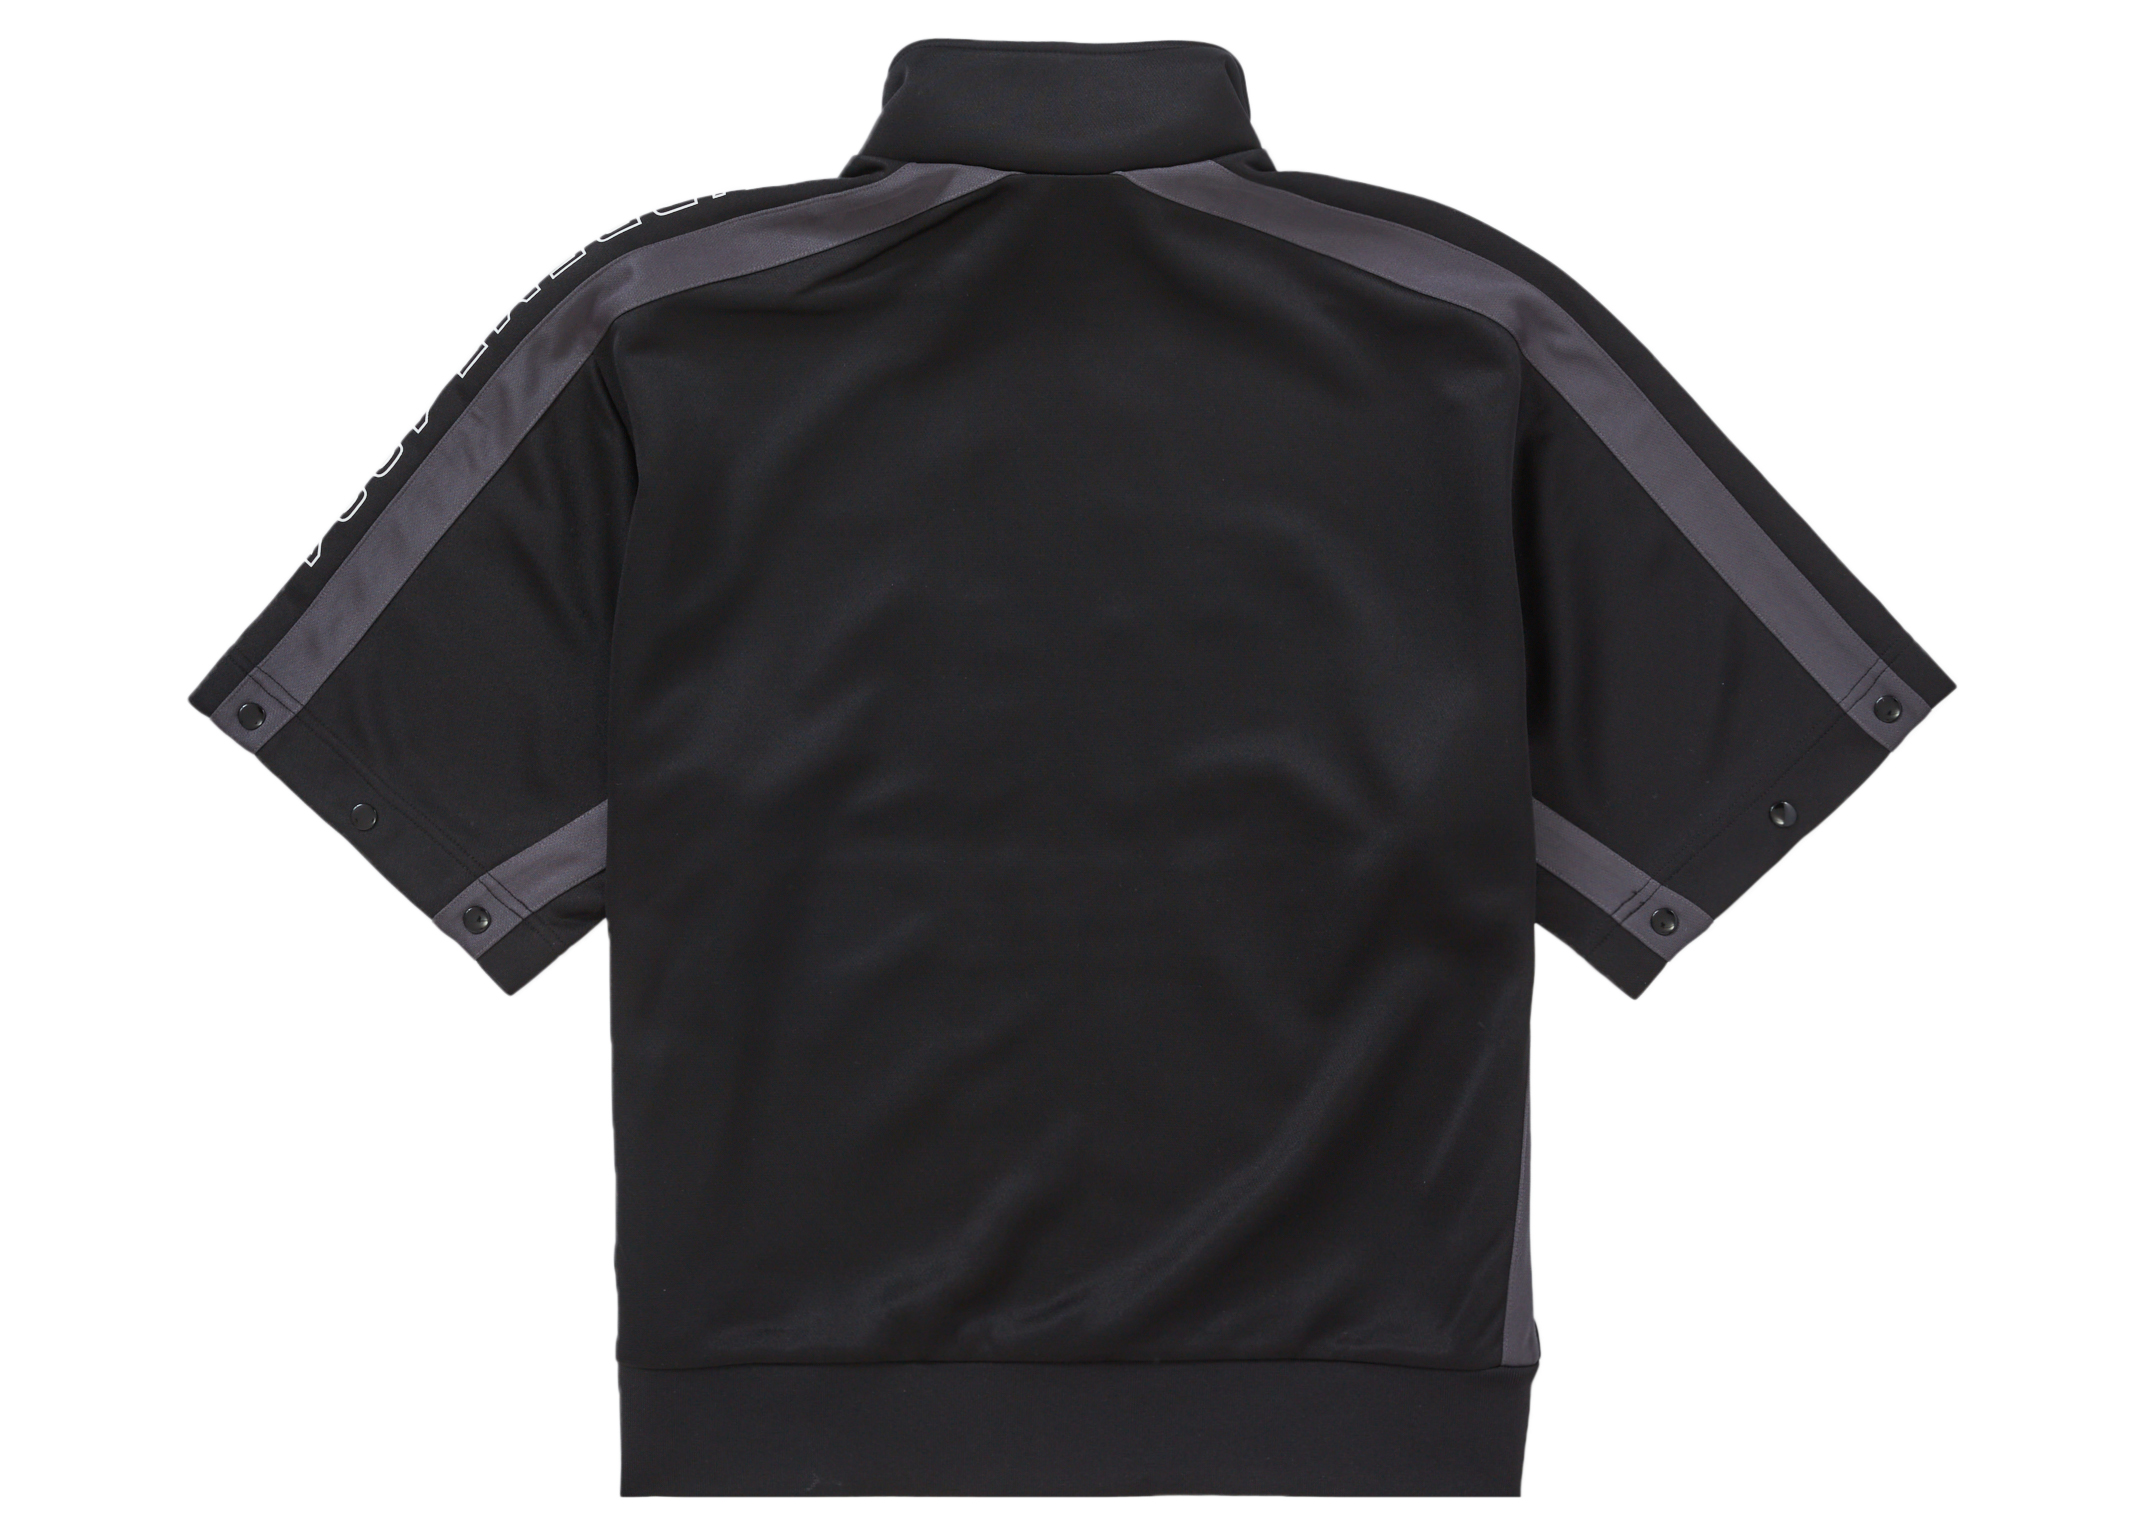 Supreme Umbro Snap Sleeve Jacket Black